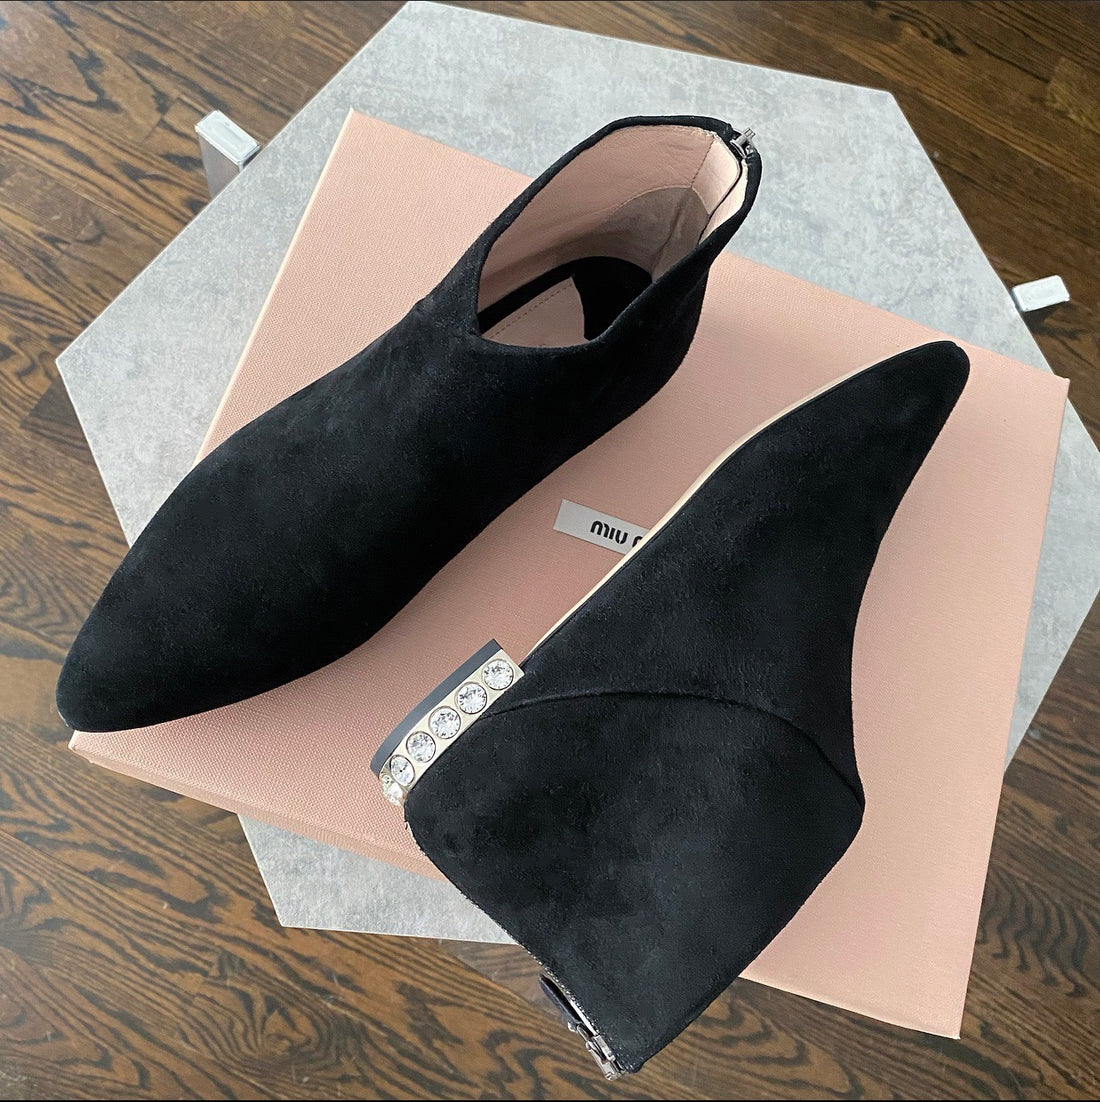 Miu Miu Black Suede Flat Ankle Boots Rhinestone Heel - 36 (5.5)